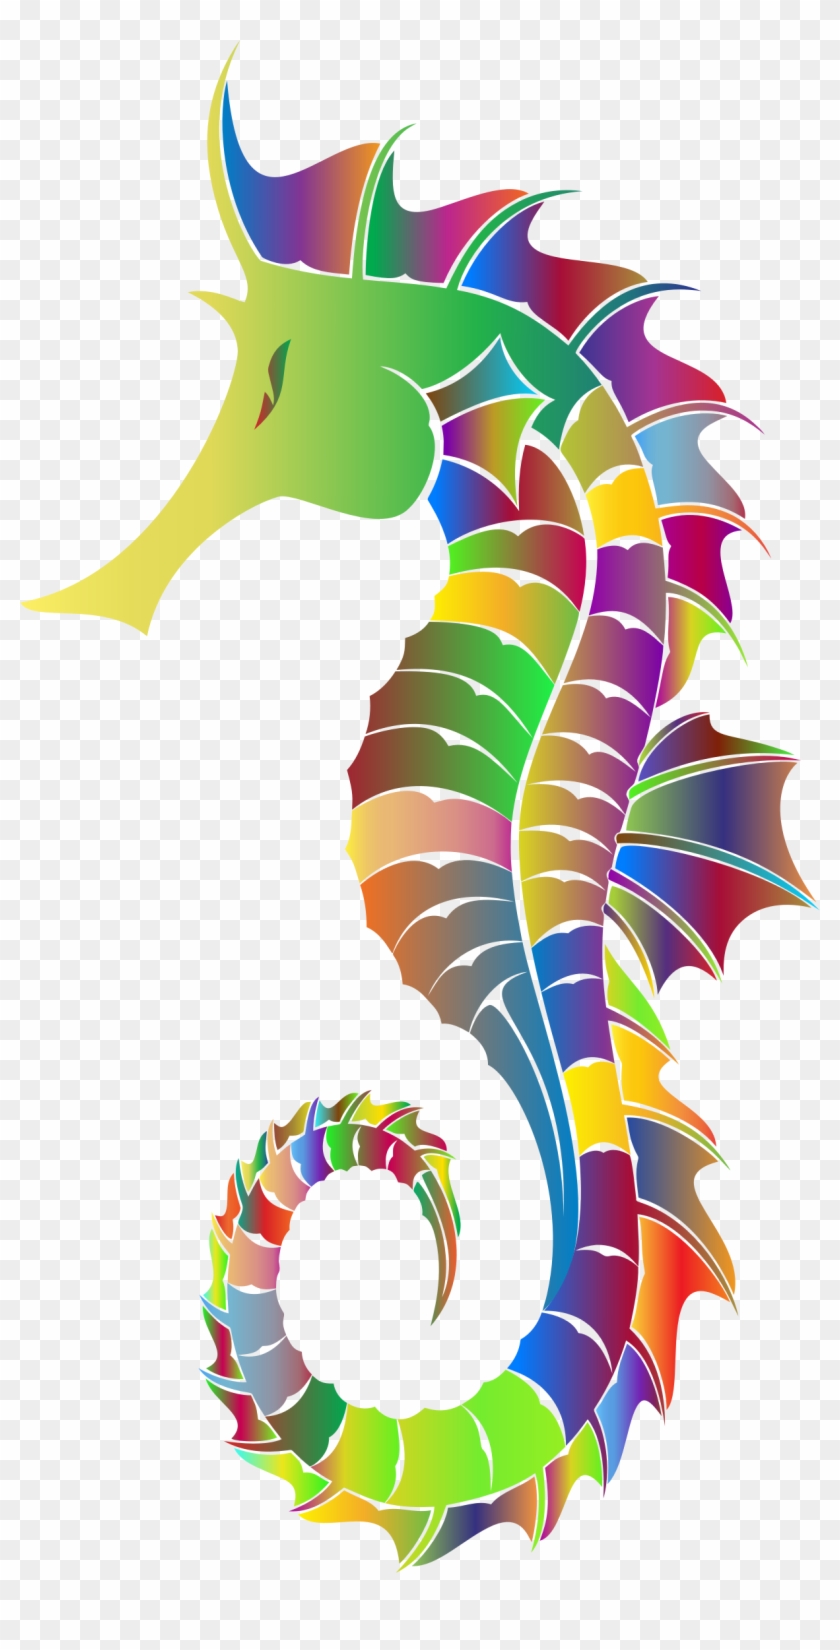 Detailed Seahorse Silhouette - Detailed Seahorse Silhouette #801167